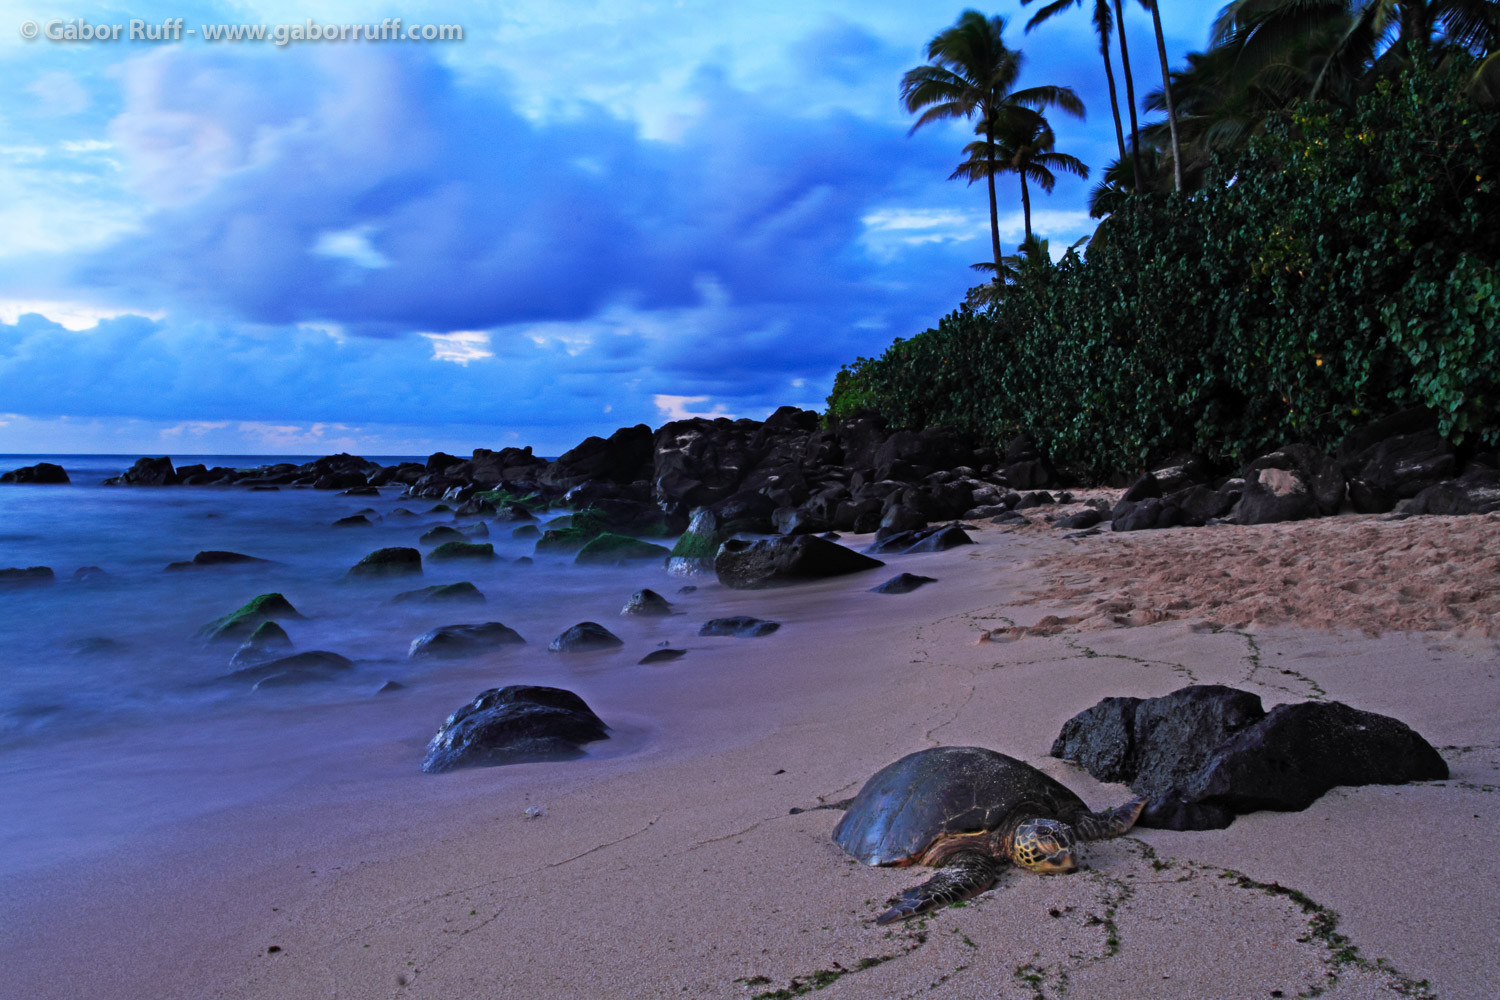 GR_131009_5338_hawaii-beach-1500x1000.jpg